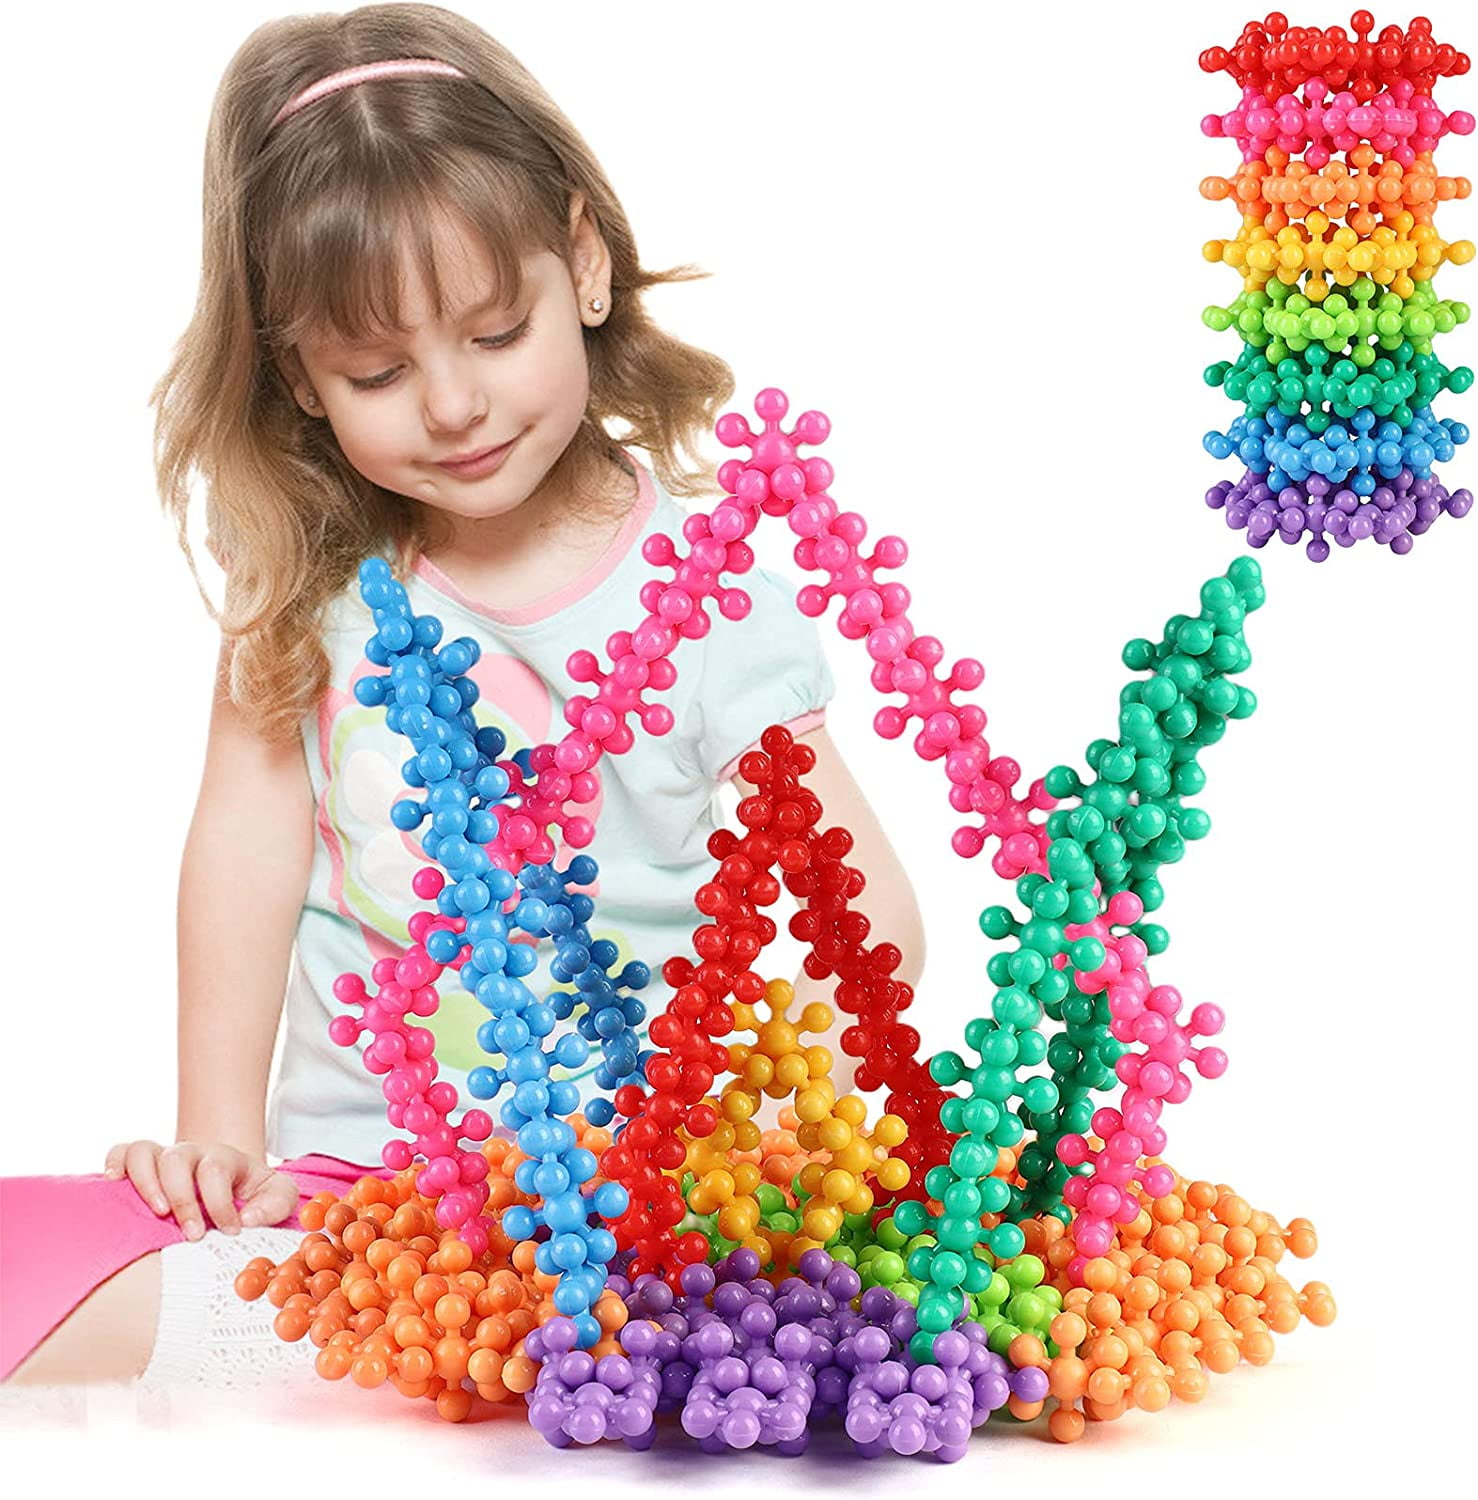 120 Pieces Building Blocks Toys Interlocking Solid Plastic Building Blocks Sets Educational Sensory Toys for Boys Girls Children 